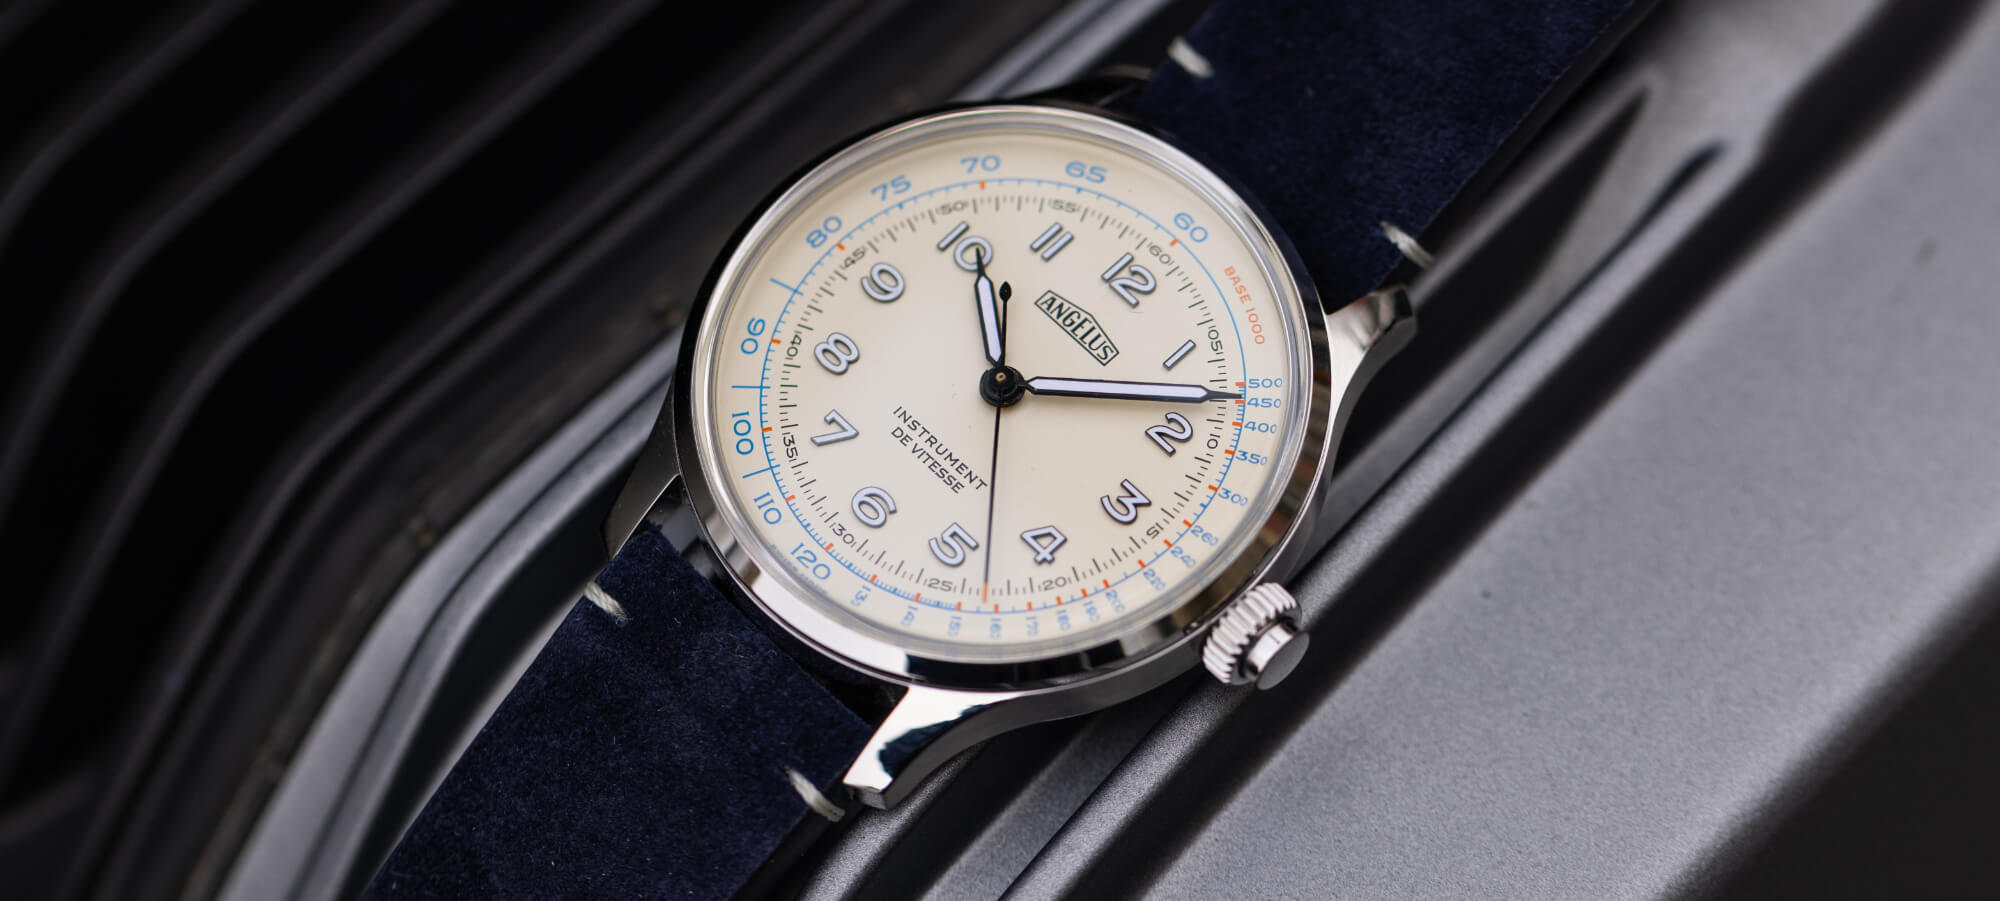 New Release: Angelus Instrument De Vitesse Monopusher Chronograph Watch | aBlogtoWatch